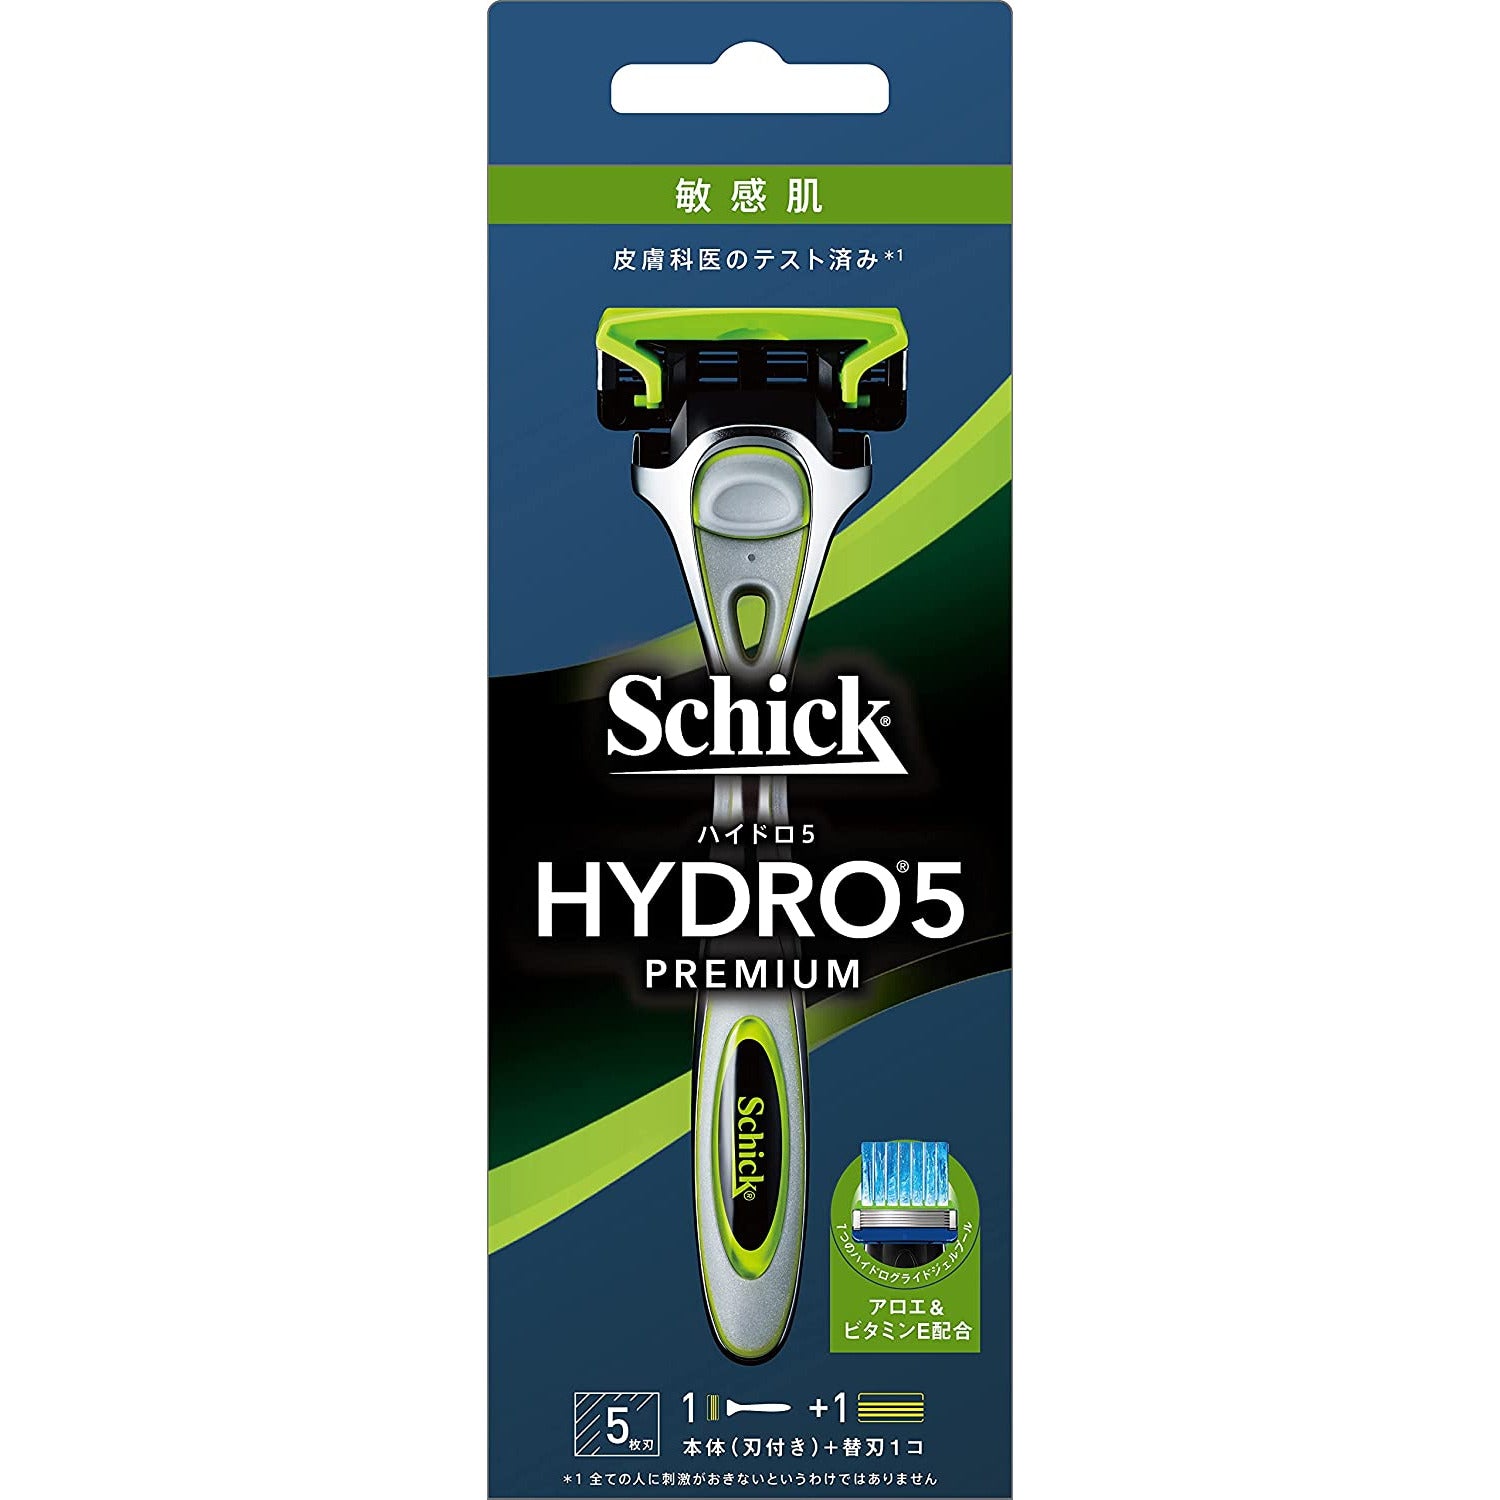 Schick Hydro 5 Premium Sensitive Skin Holder with main blade + 1 spare blade 1 set